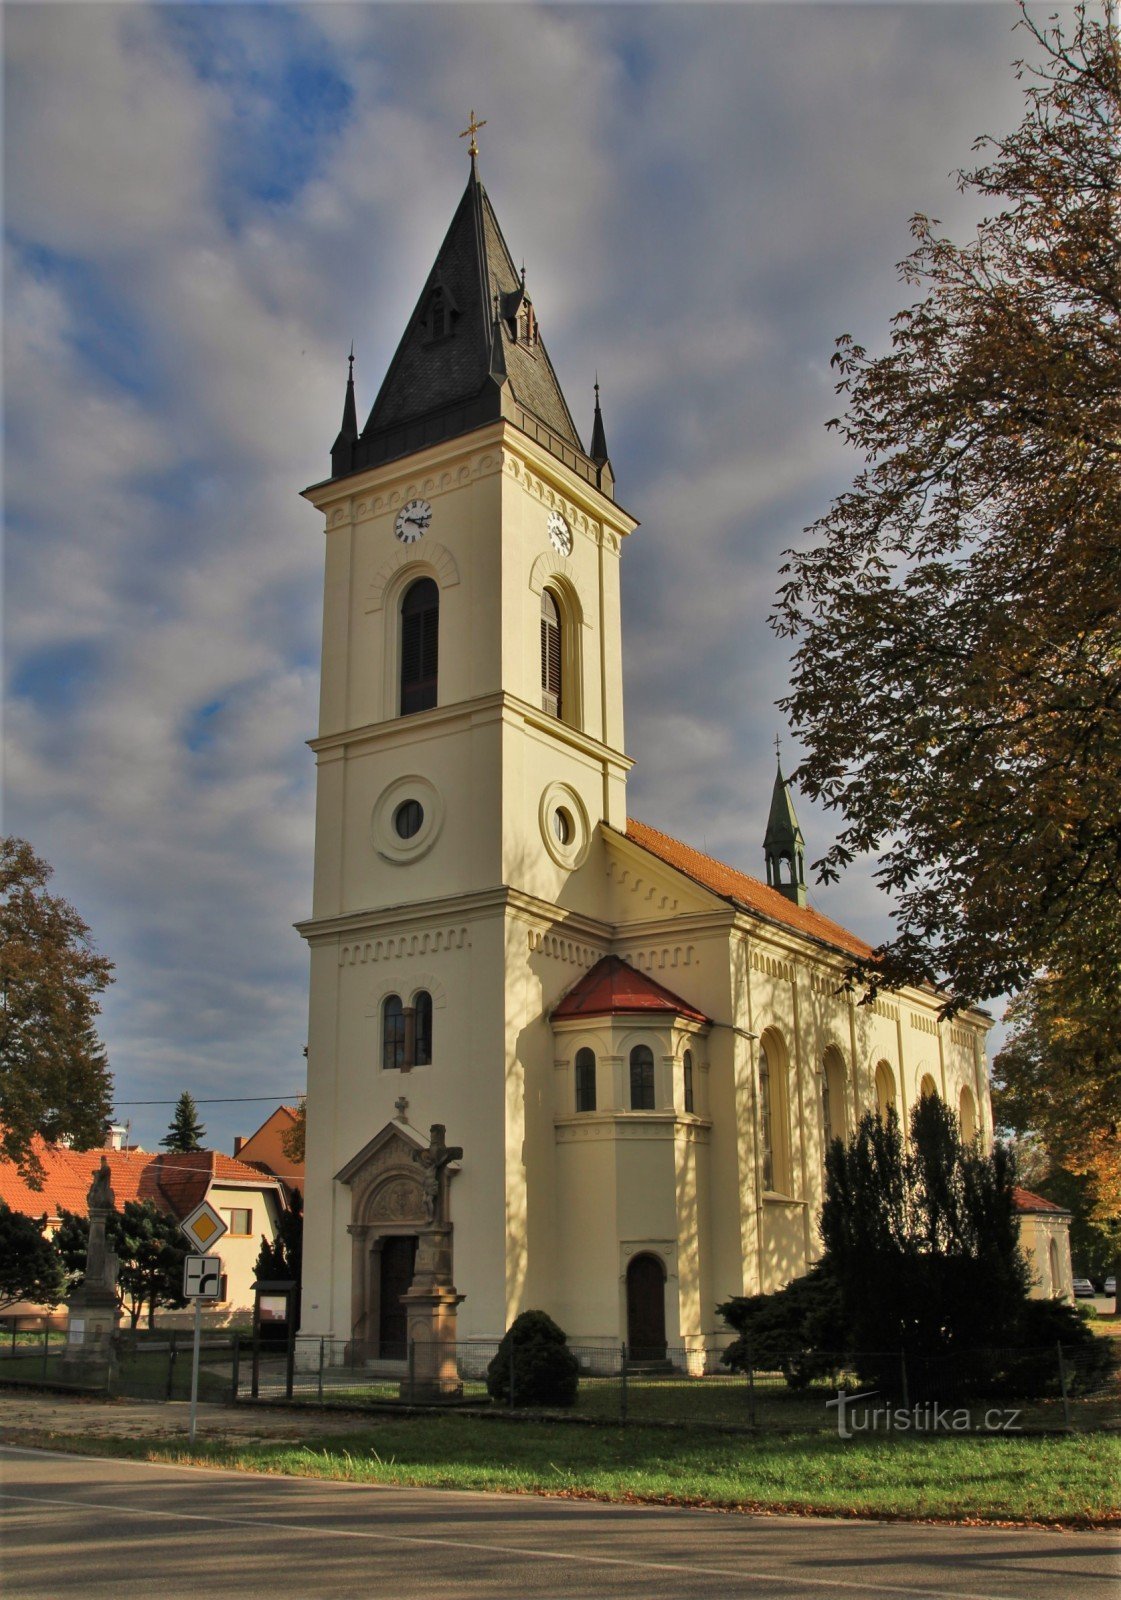 Church of St. Jan Nepomuk